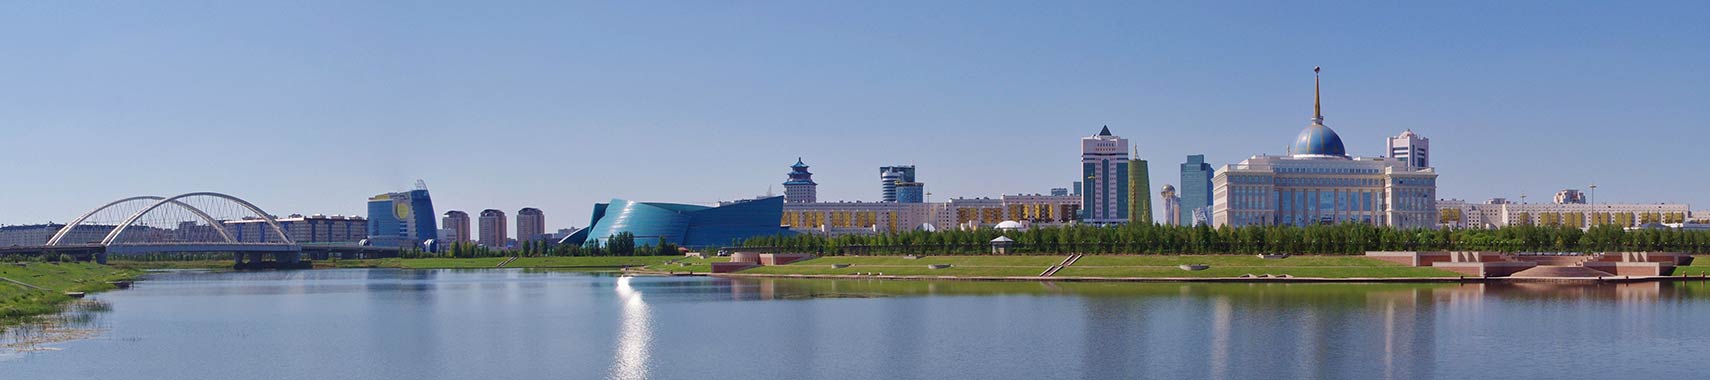 Astana skyline, with government complex